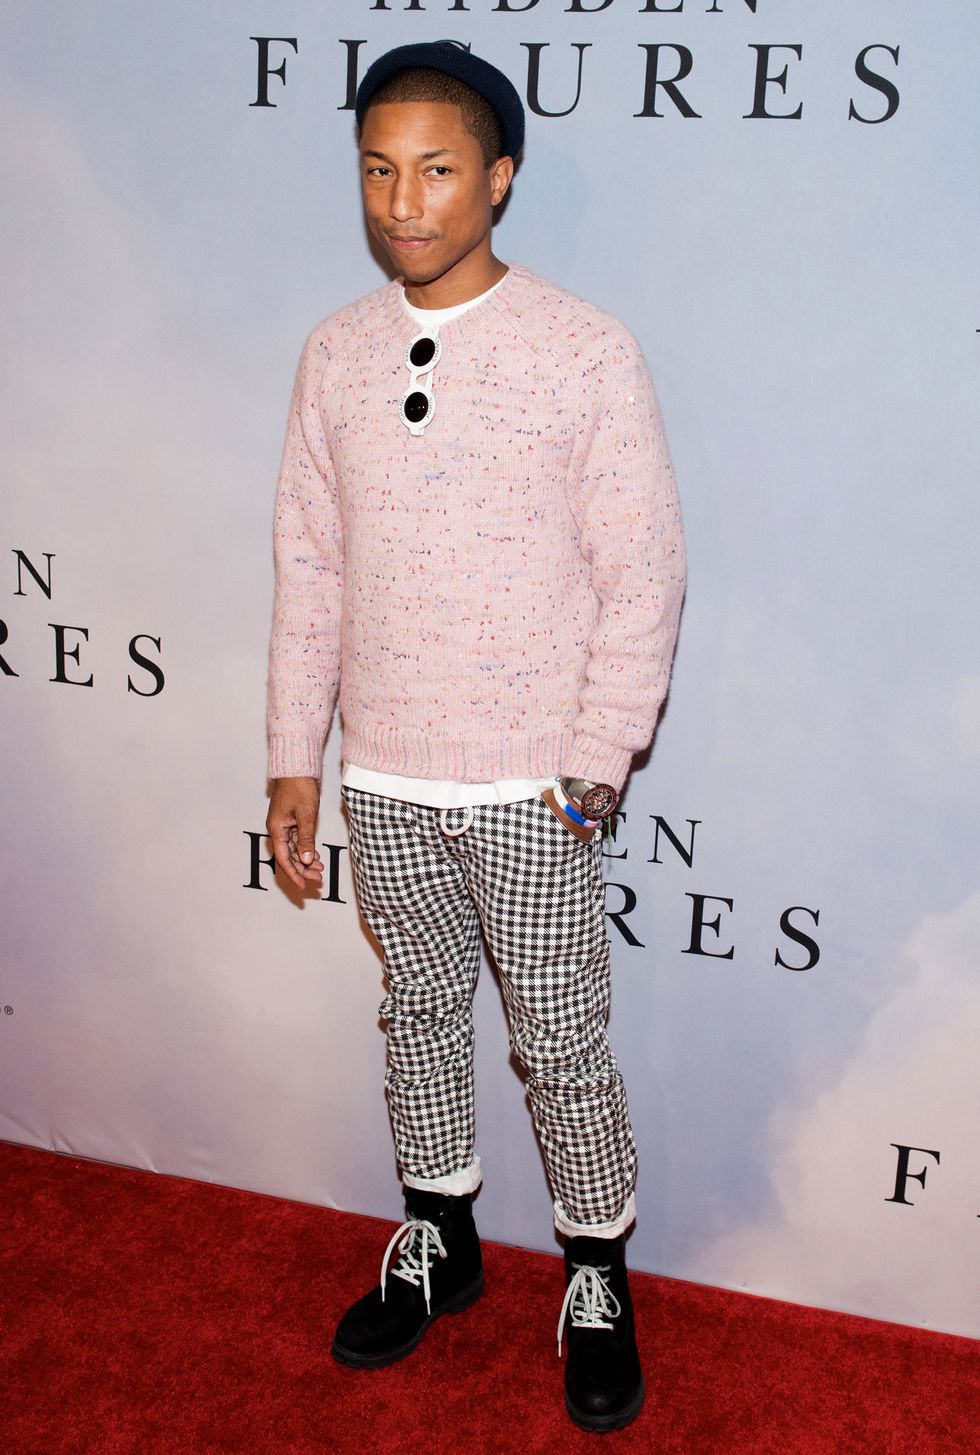 The Top Seven Pharrell Williams Fashion Moments - Okayplayer